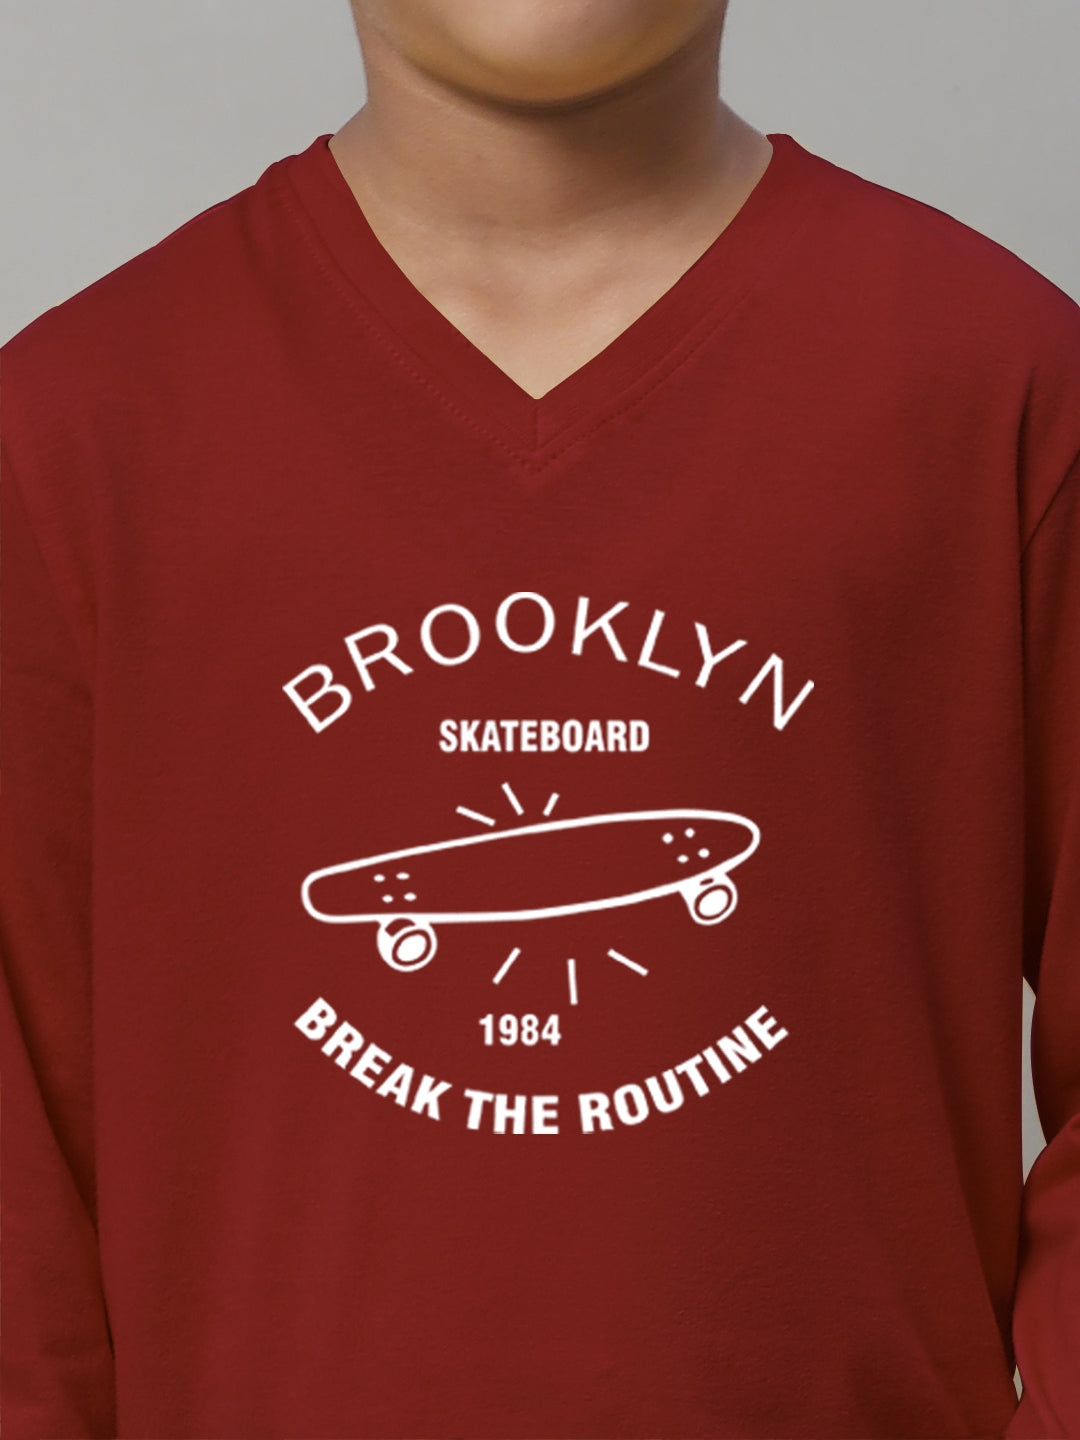 Boys Brooklyn Full Sleeves Printed T-Shirt - Friskers